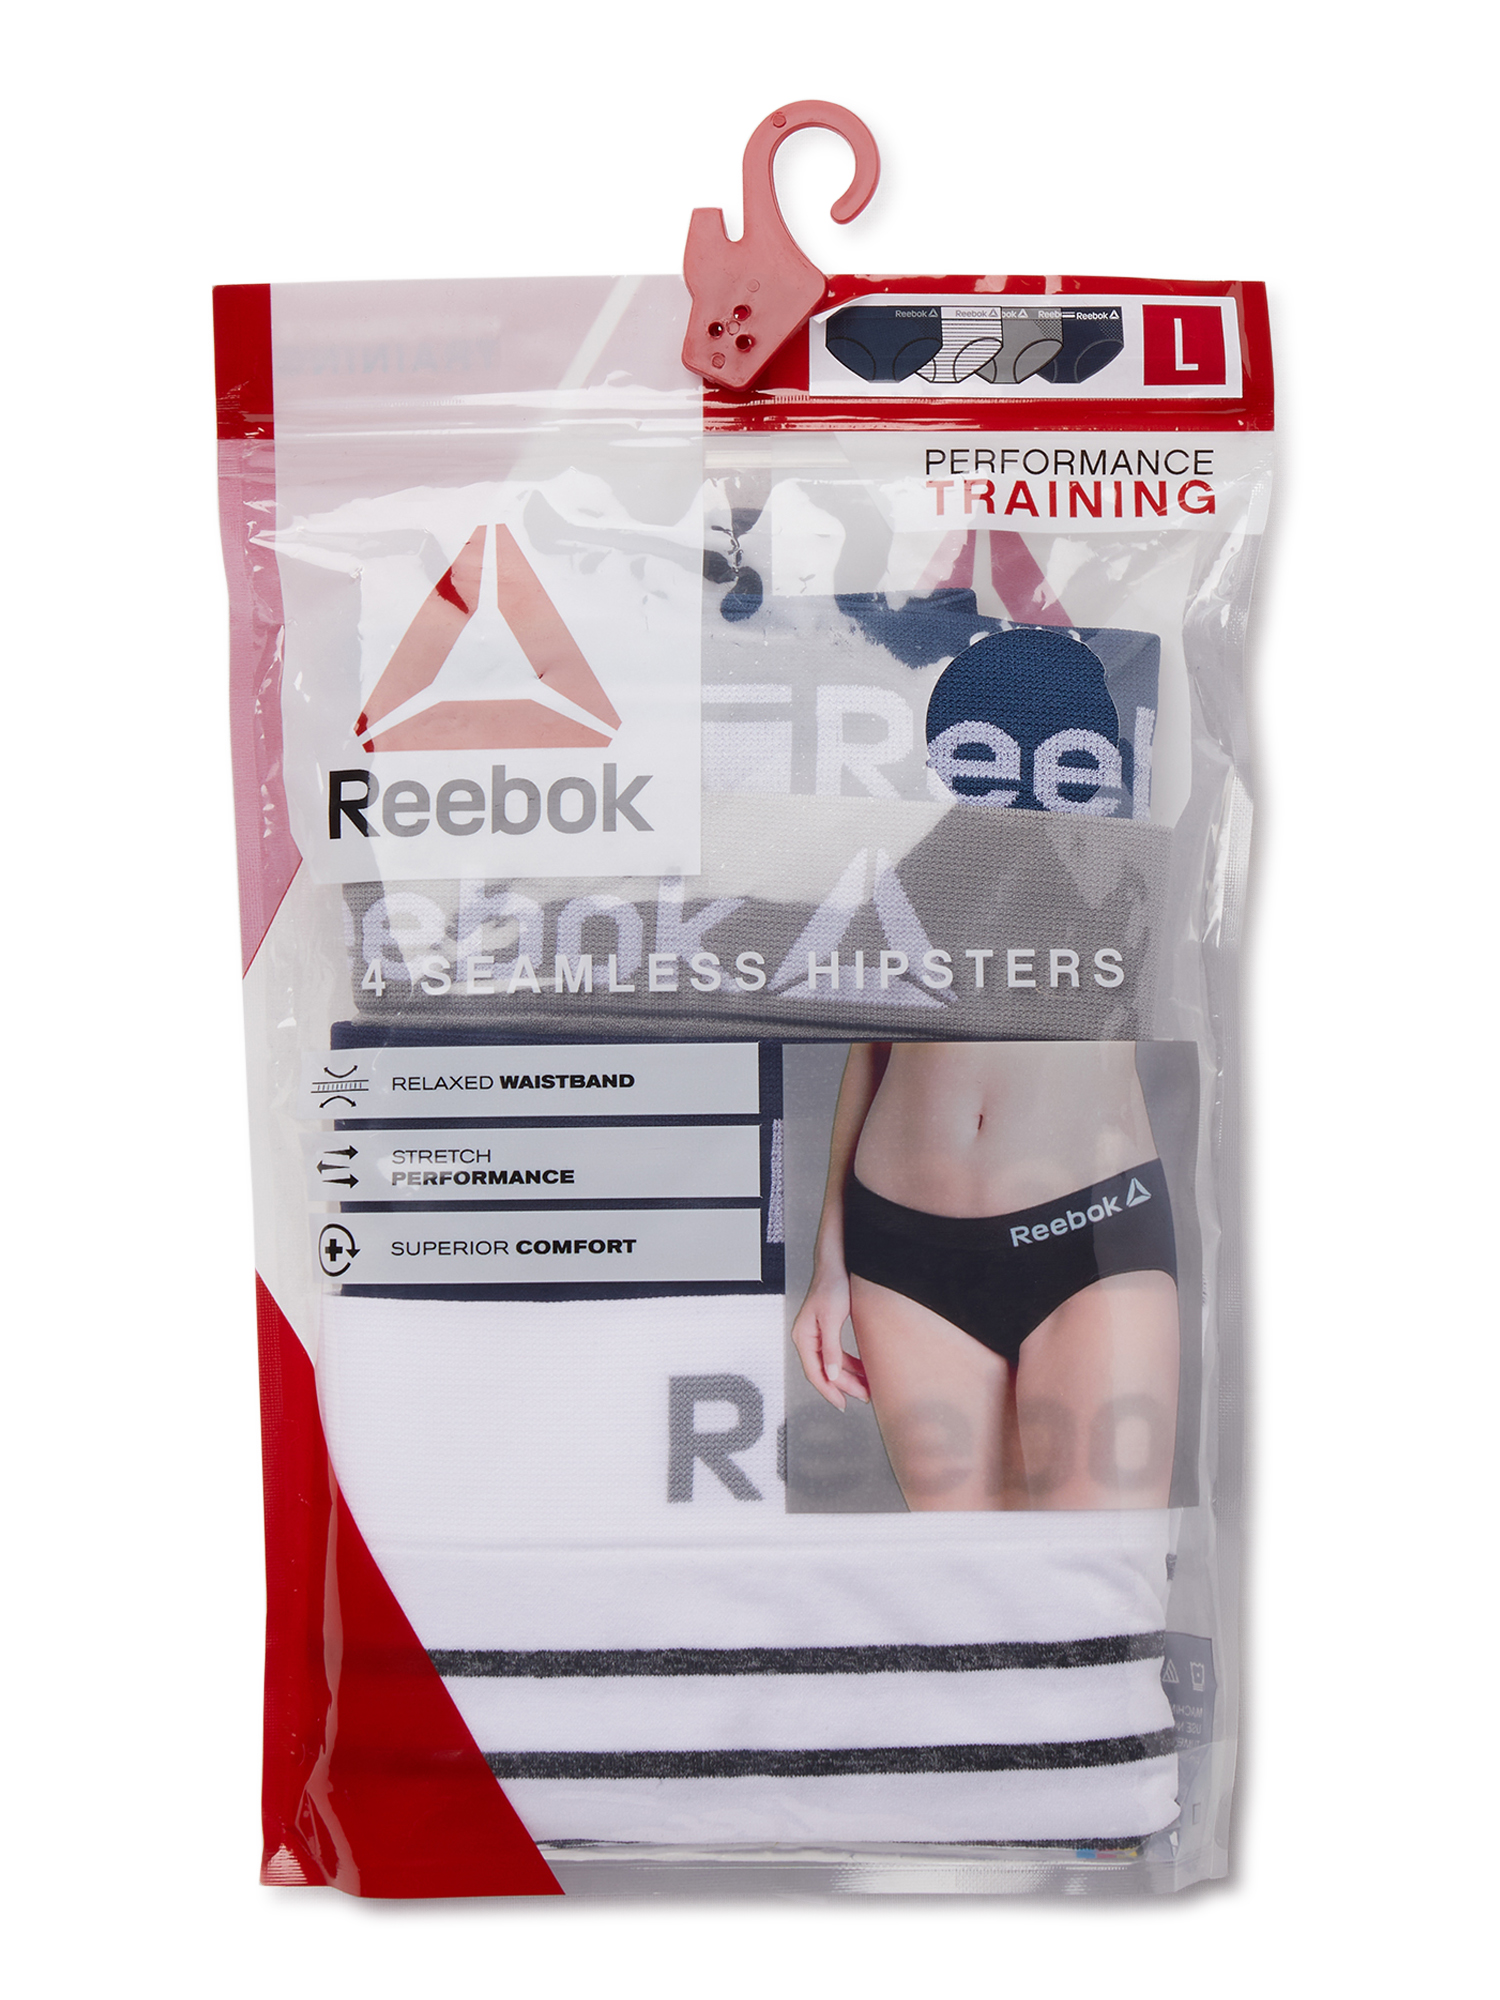 Reebok Women's Underwear Seamless Hipster Panties, 4-Pack - image 3 of 10